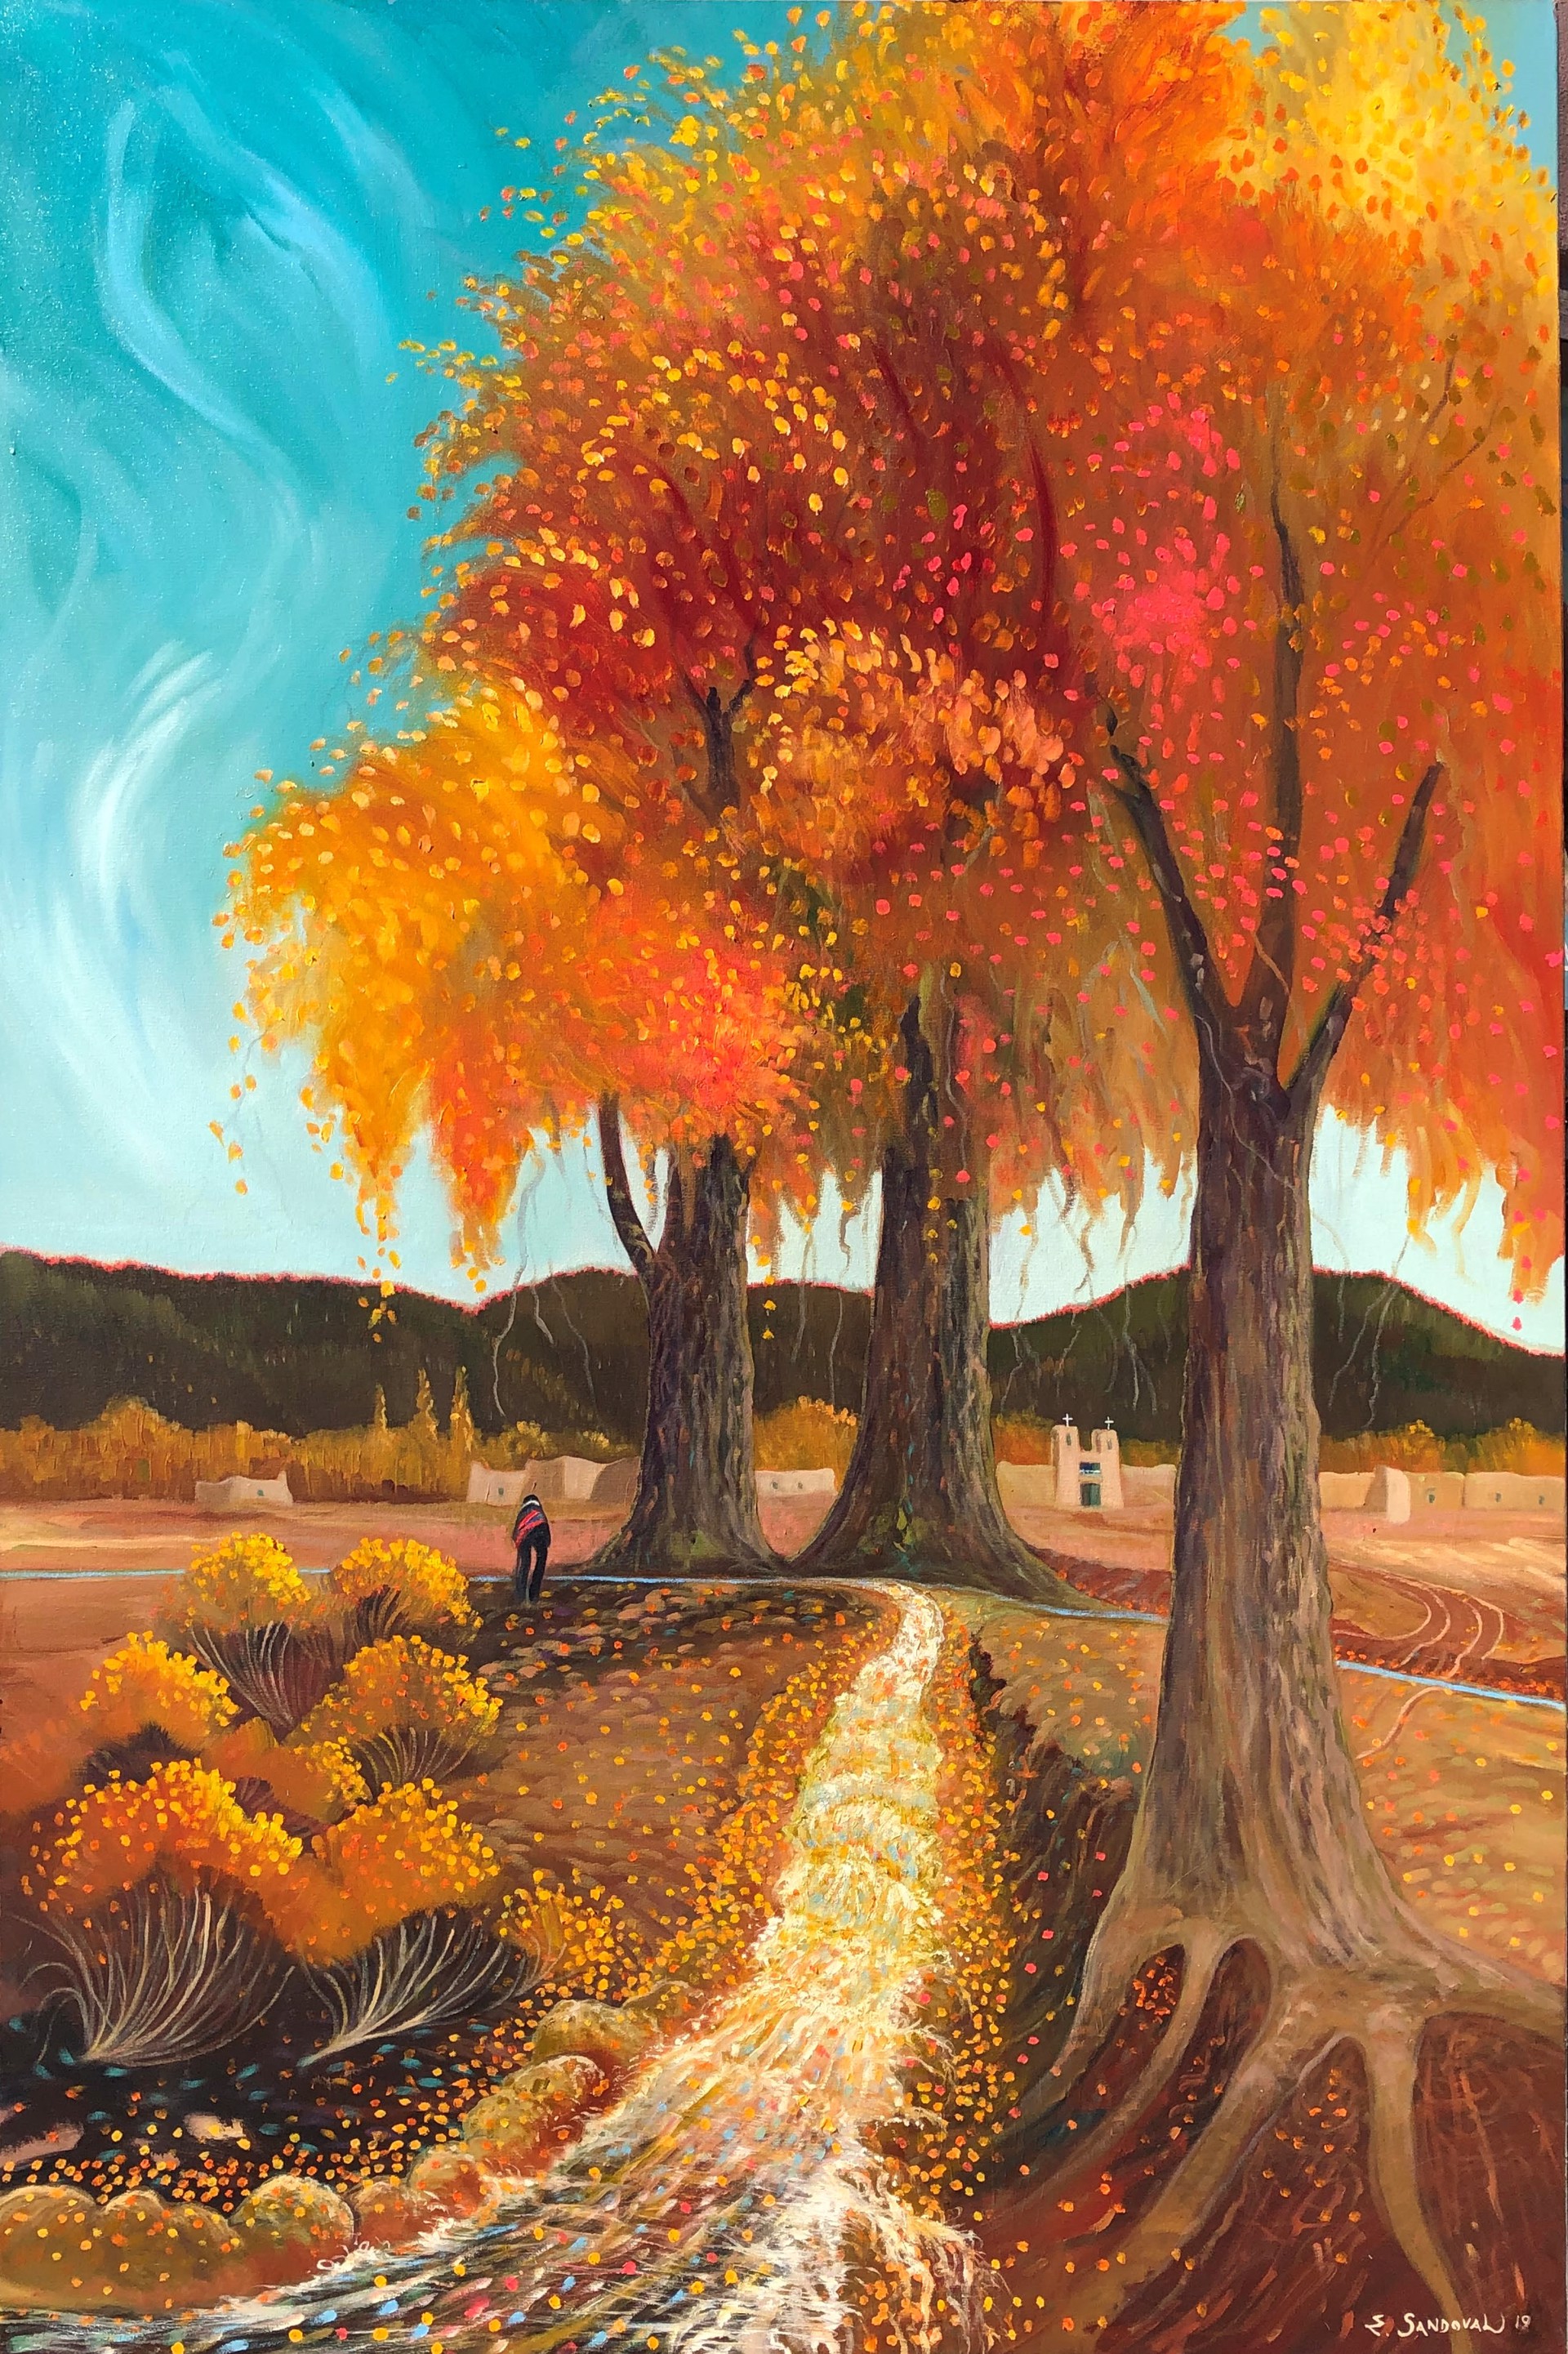 Light of Autumn by Ed Sandoval